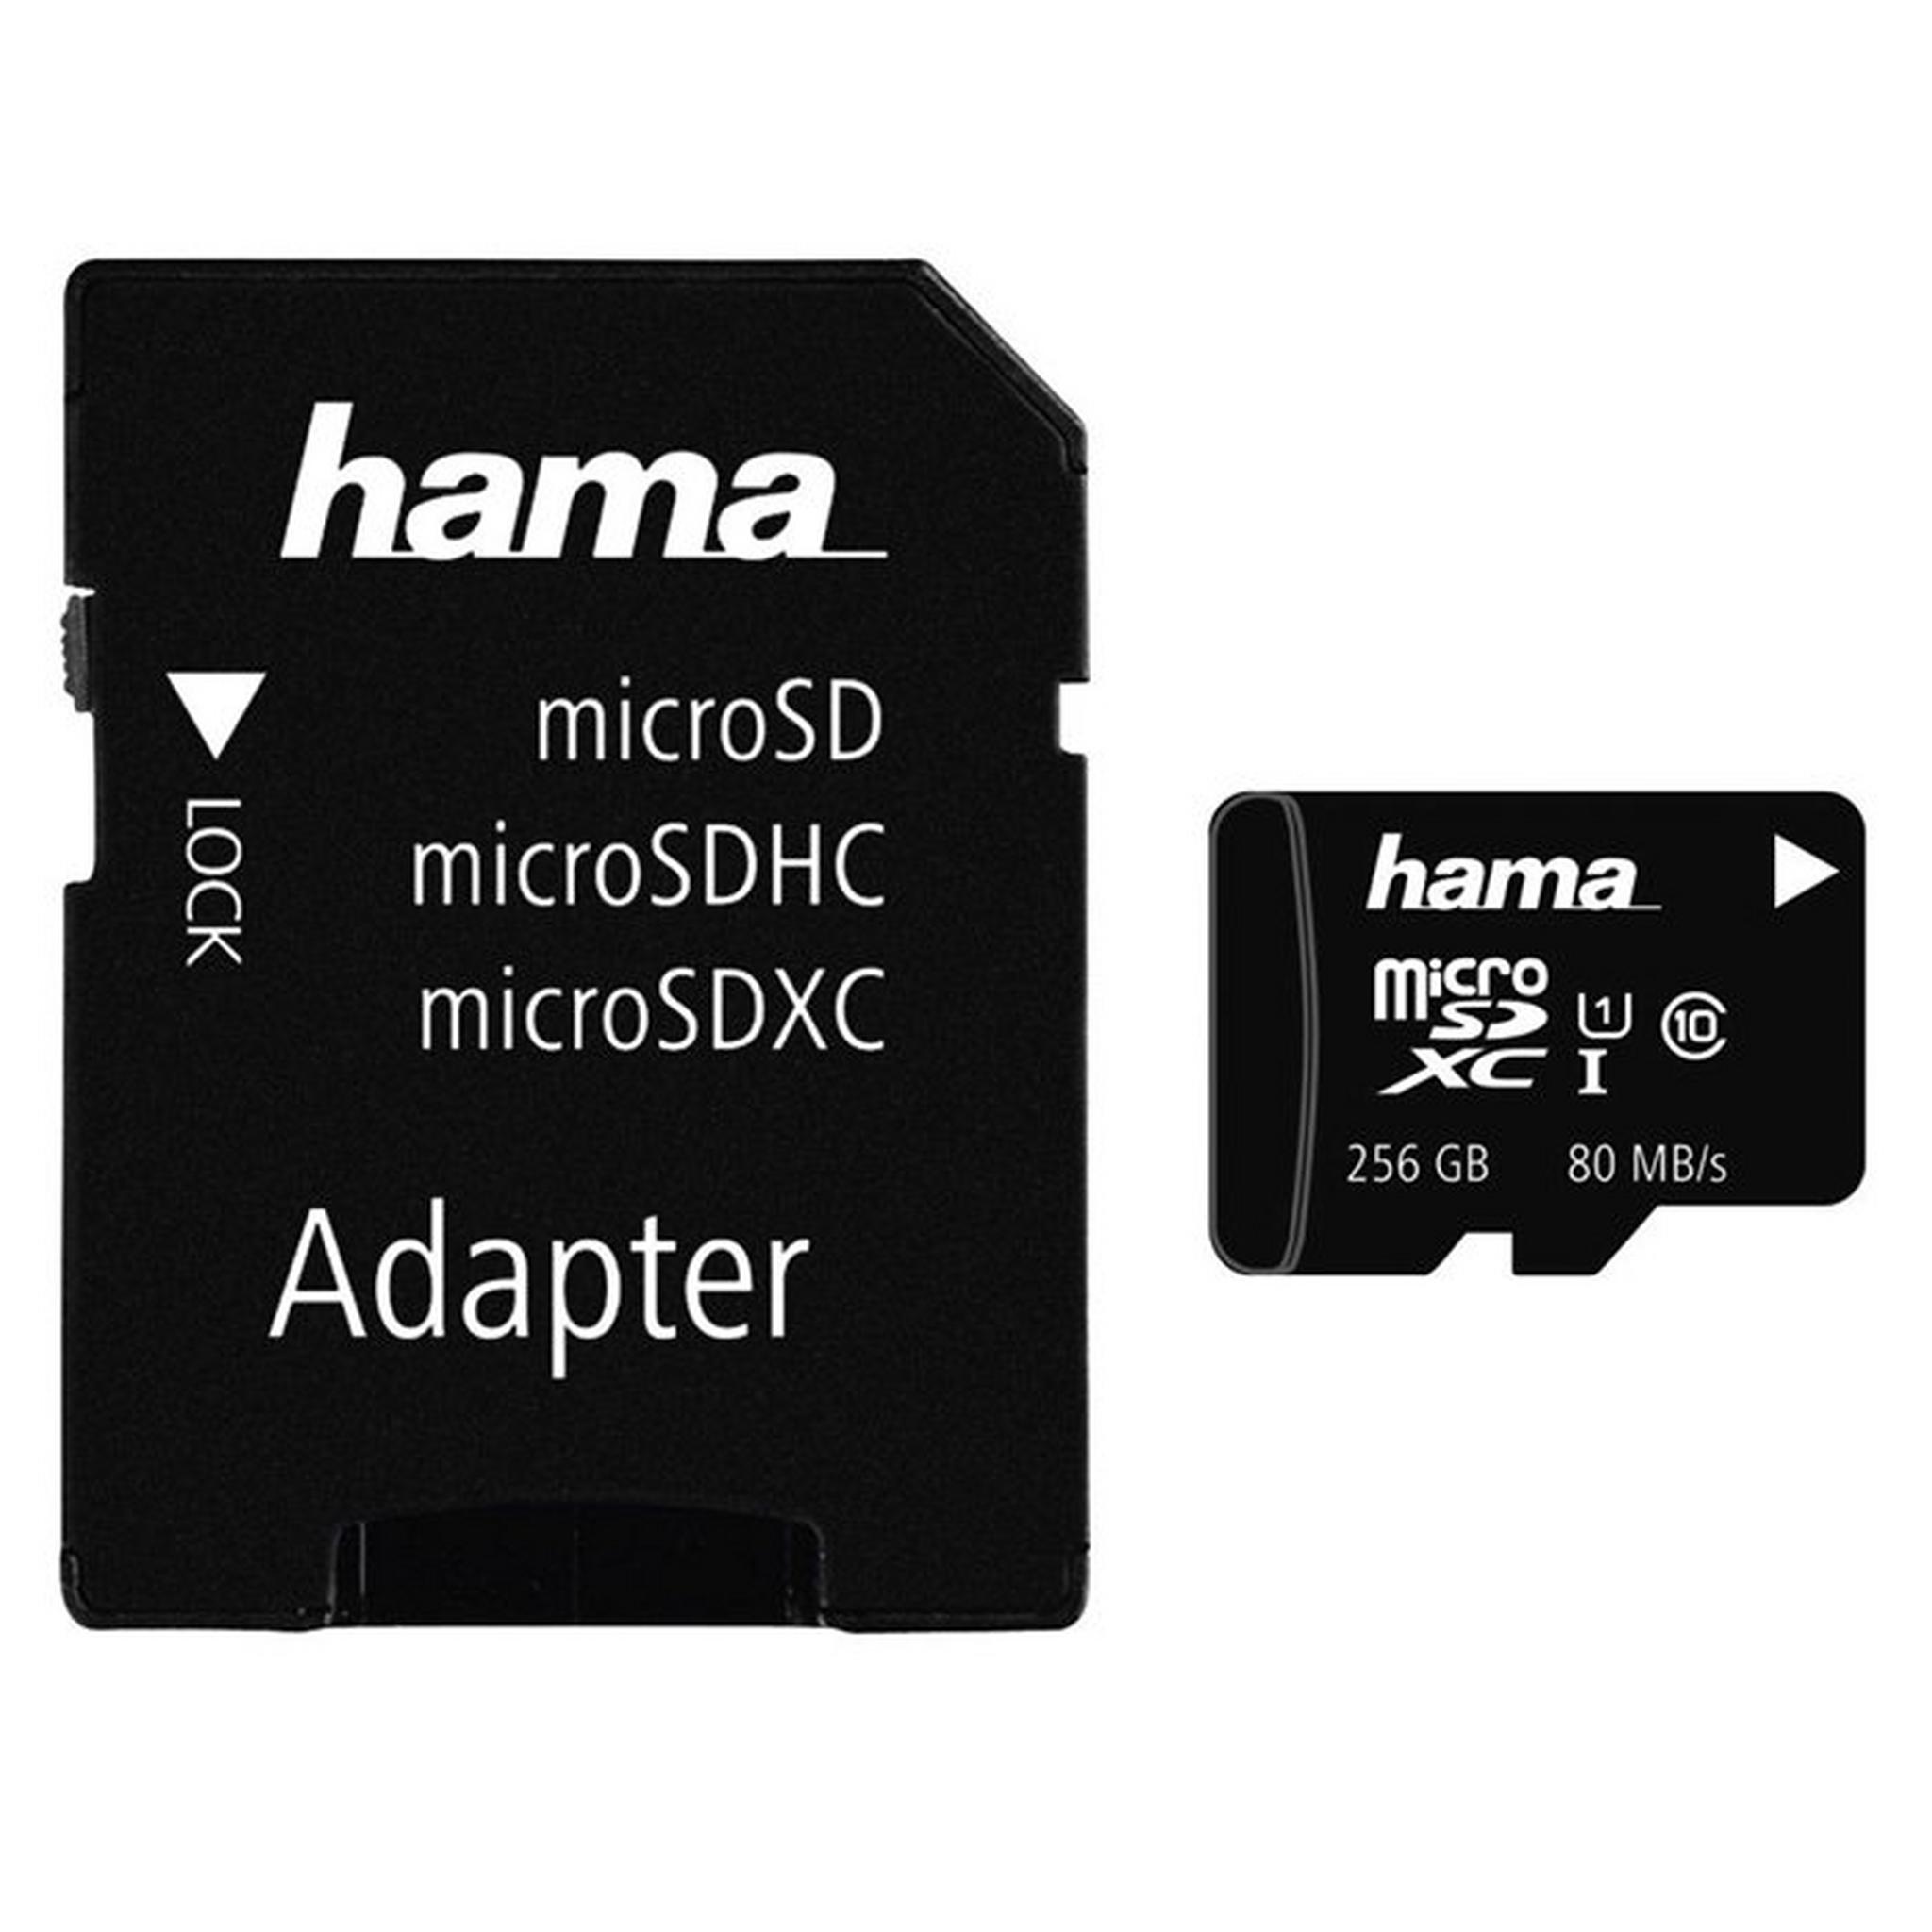 Hama MicroSDXC Class 10 UHS-I Memory Card, 256GB, 124173 – Black